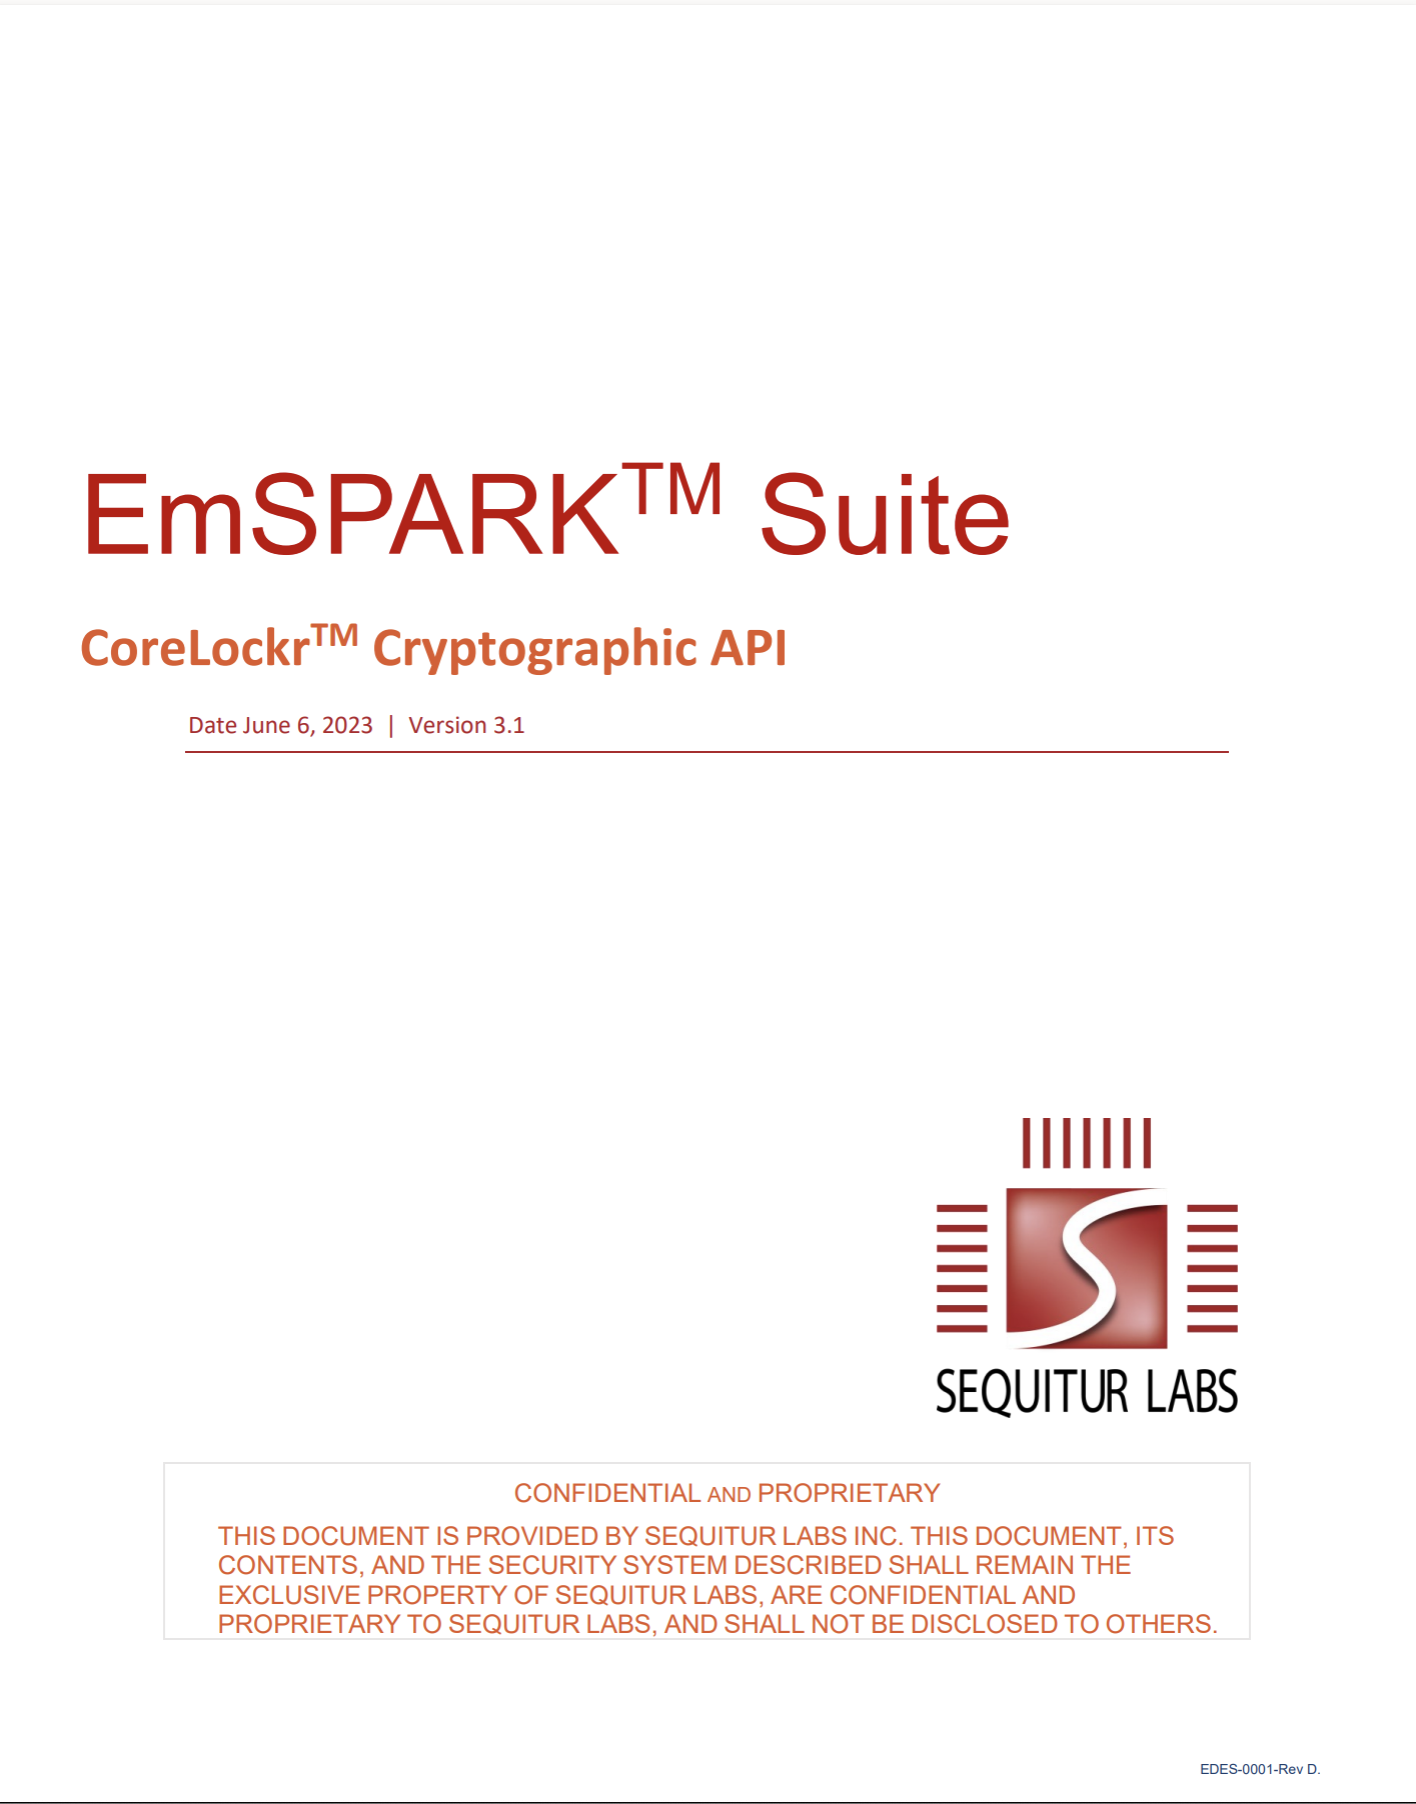 EmSPARK™ Security Suite CoreLockr™ Cryptographic API version 3.0